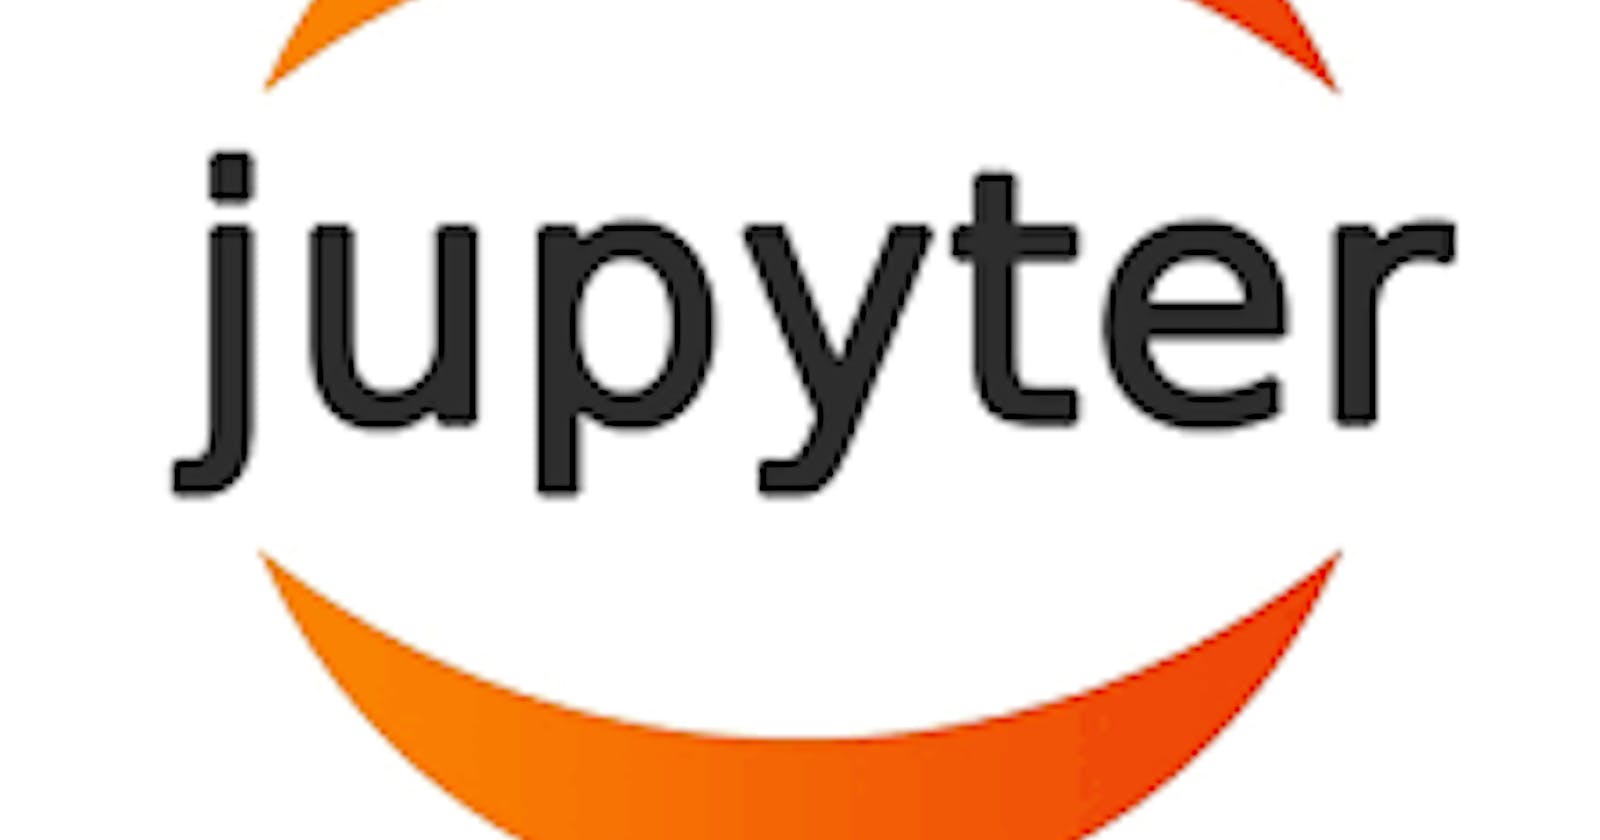 Run the Jupyter notebook in Virtual environments using pip